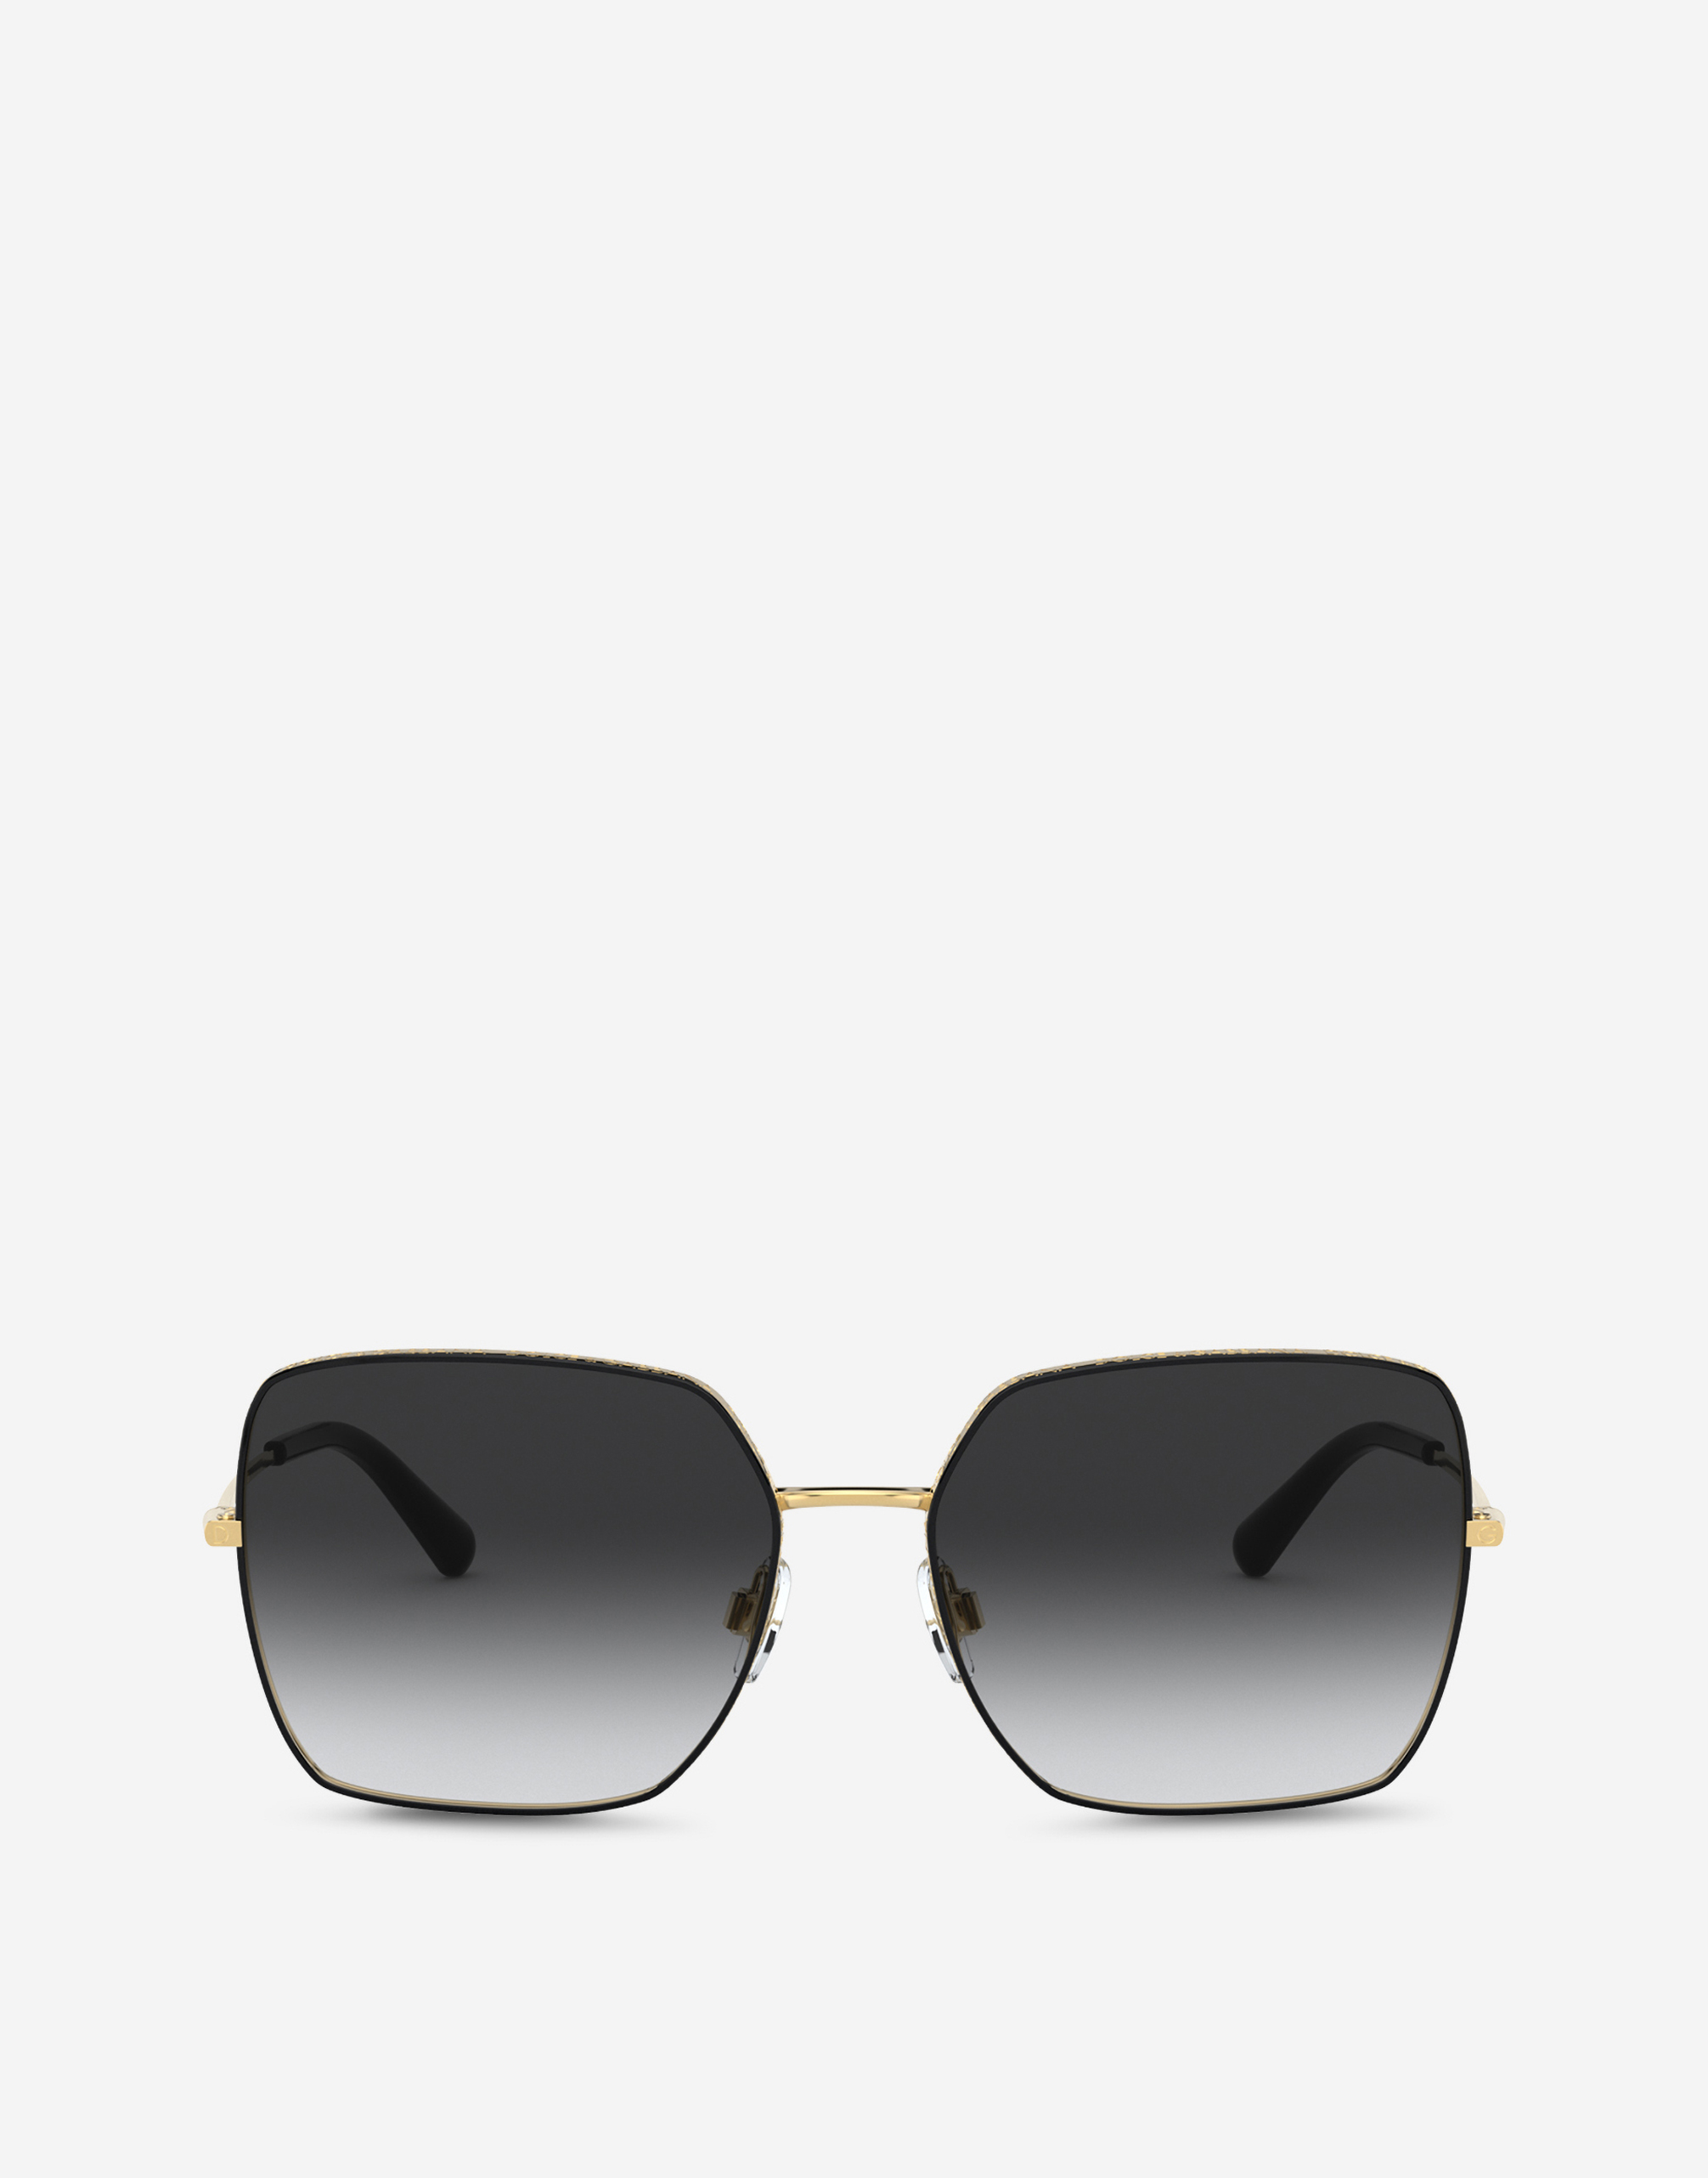 Slim sunglasses in Gold and Black